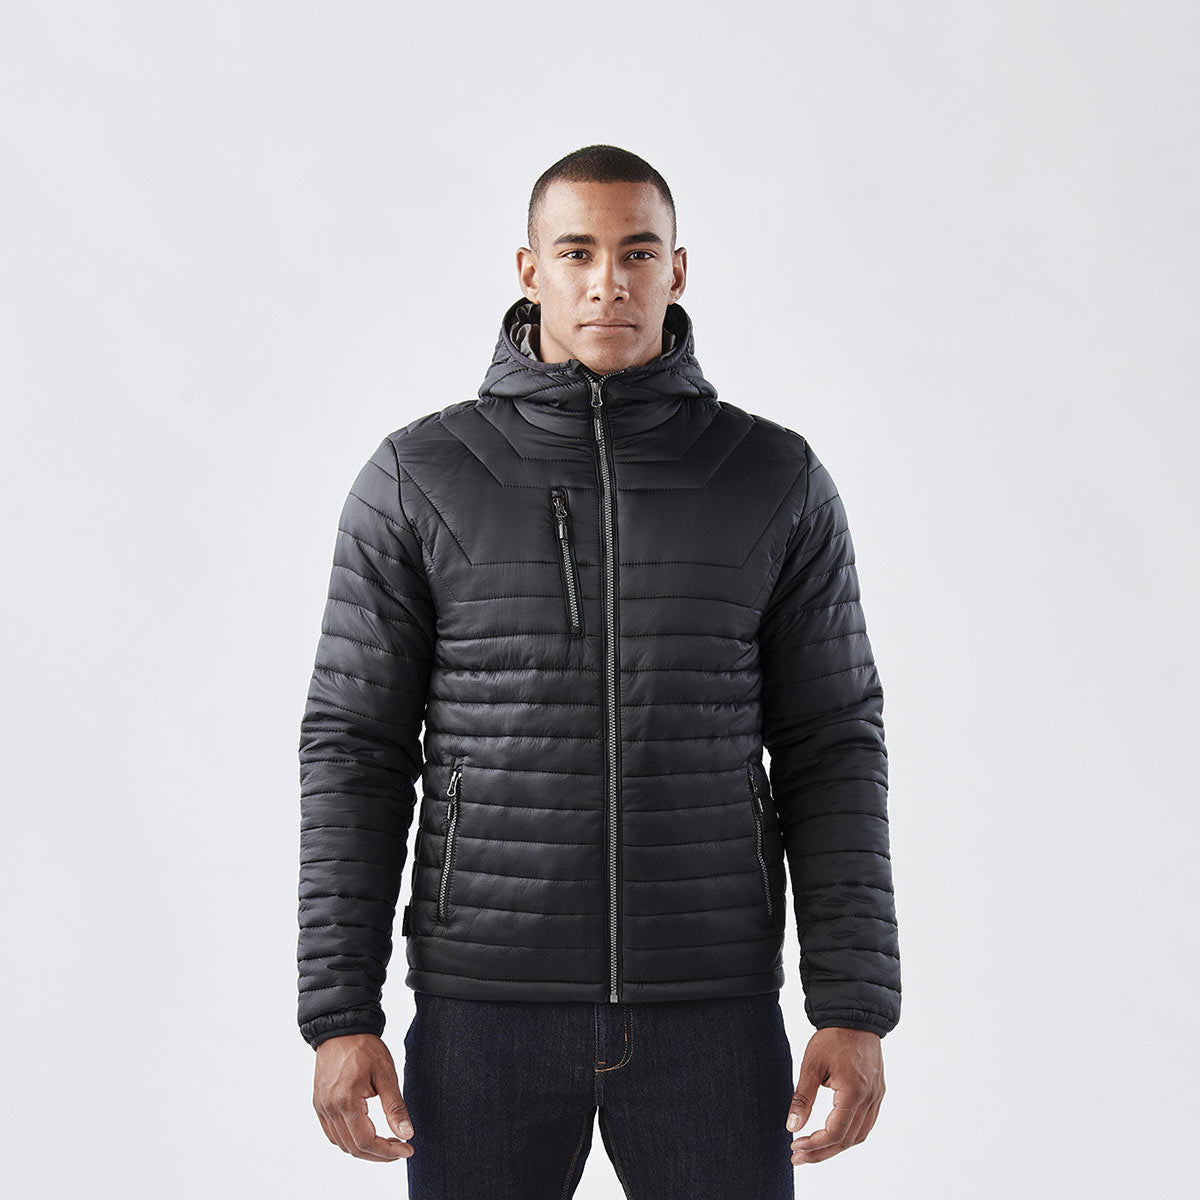 Winter Thermal Fleece Jackets For Men Hiking Climbing Coat Fishing